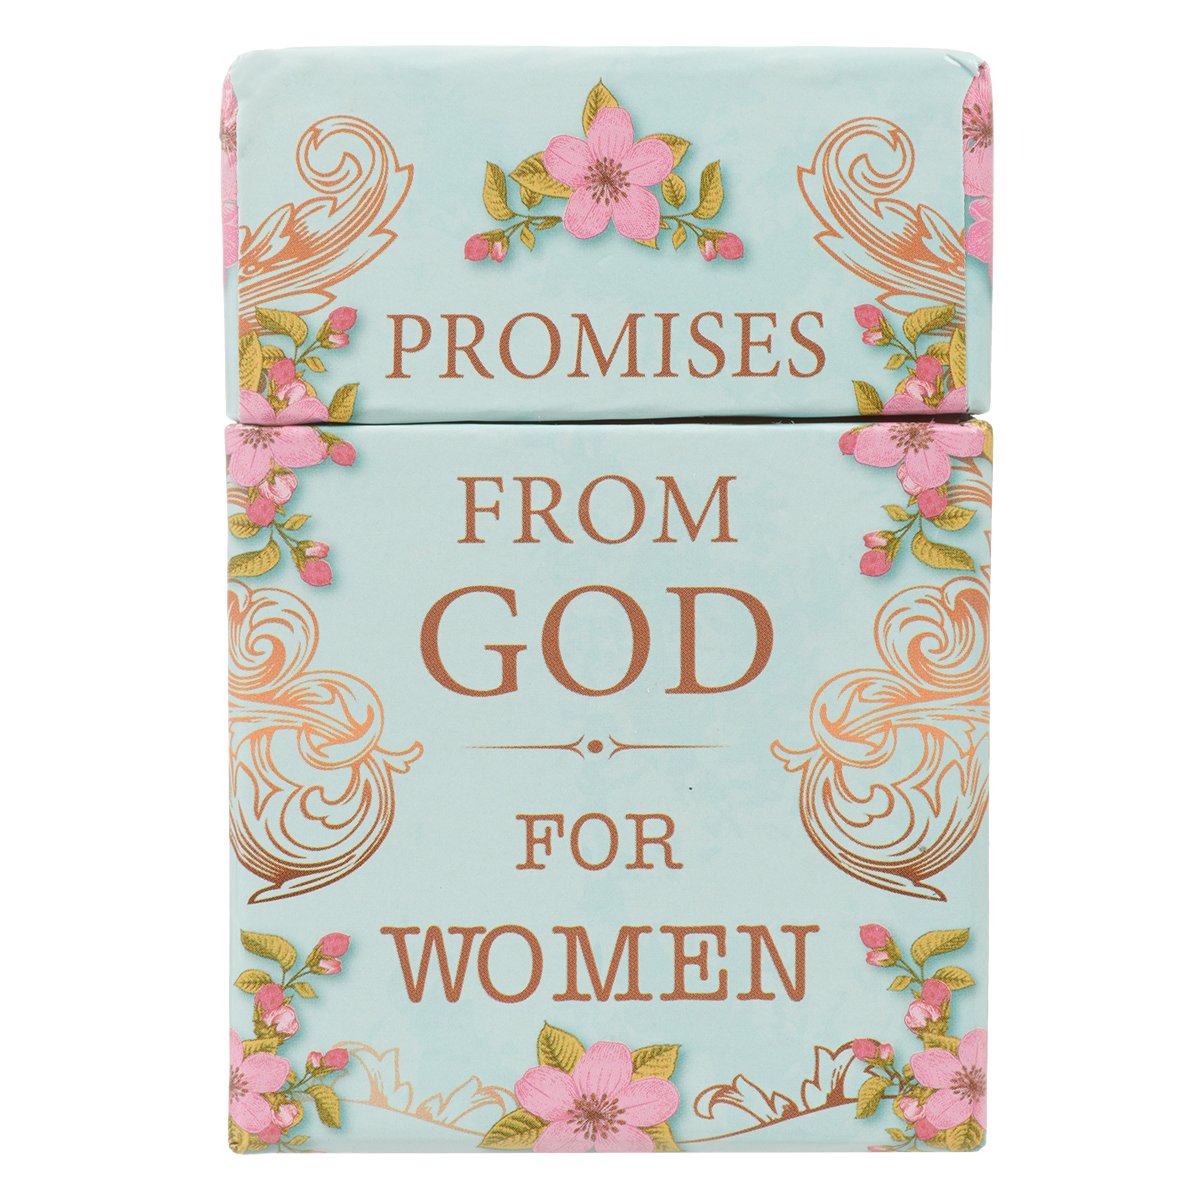 Promises From God for Women Cards